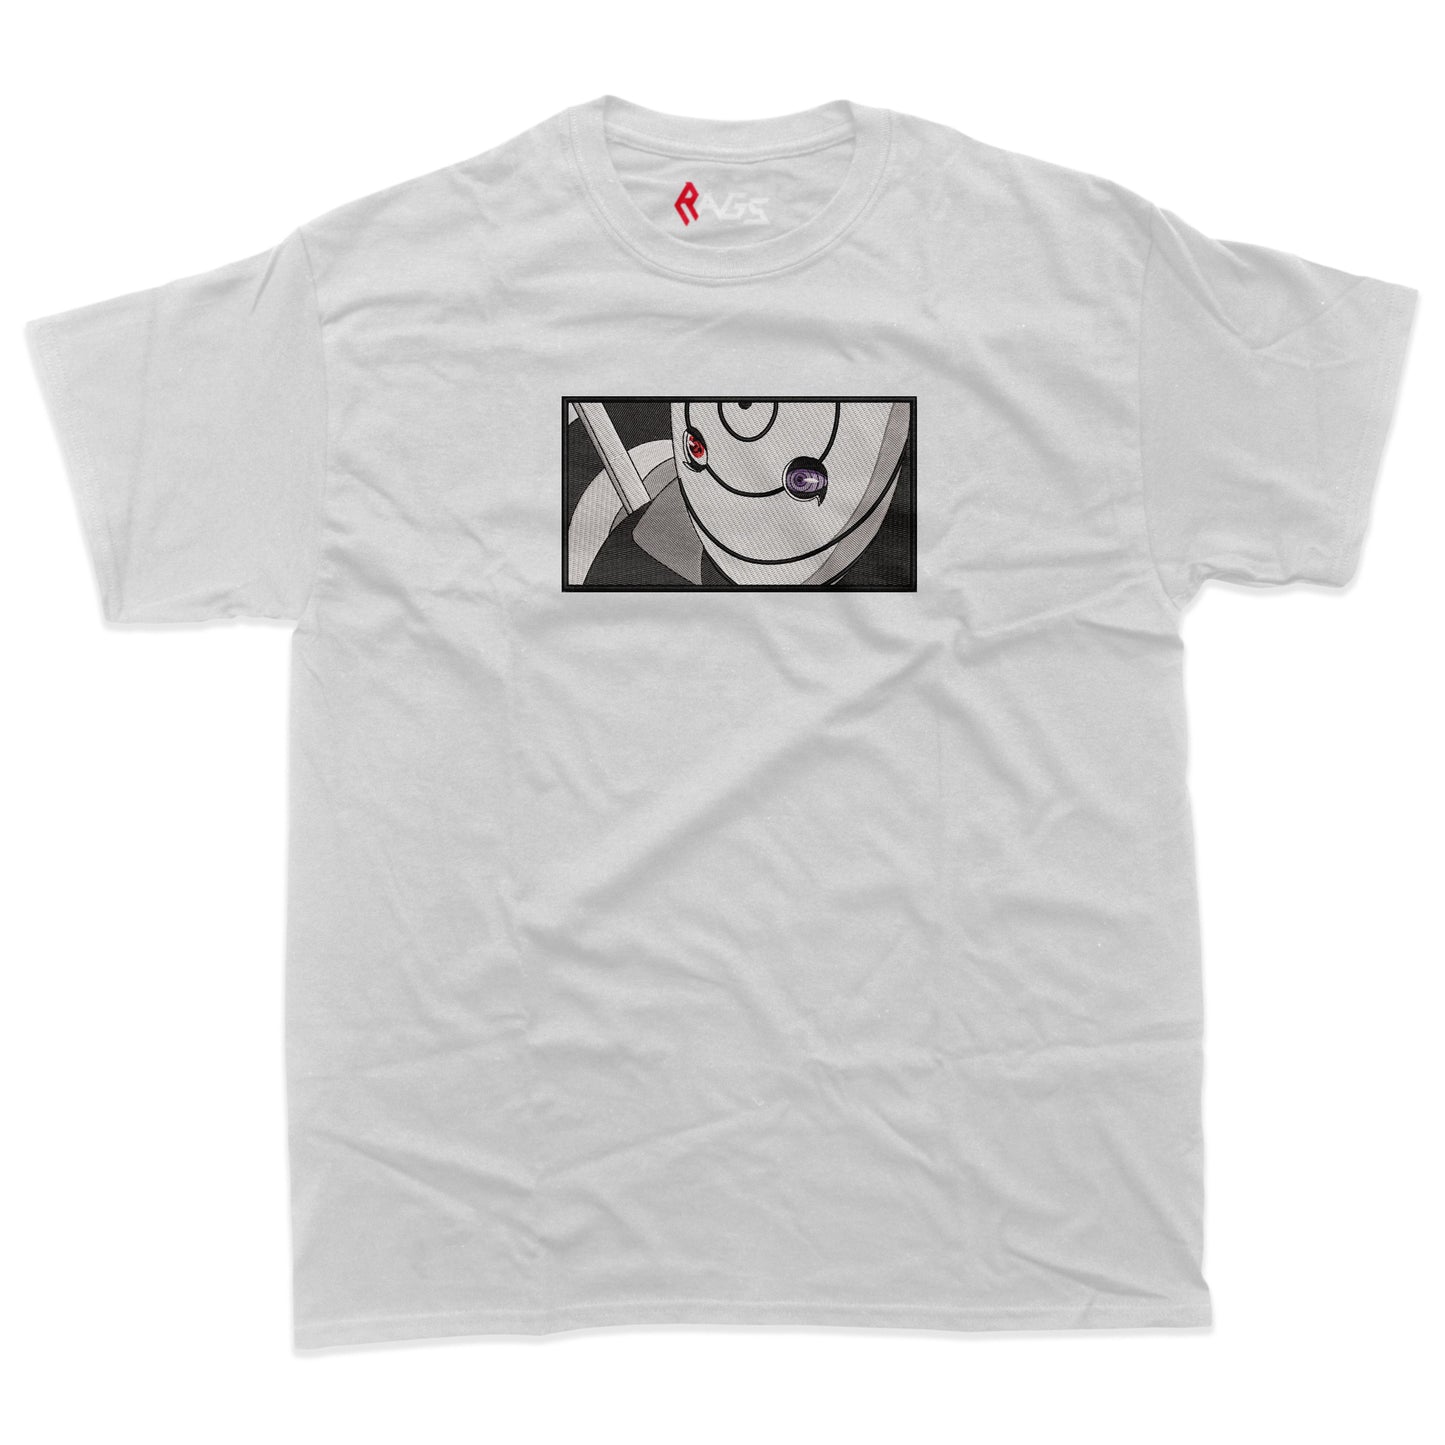 Obito Uchiha - Naruto Embroidered T-Shirt